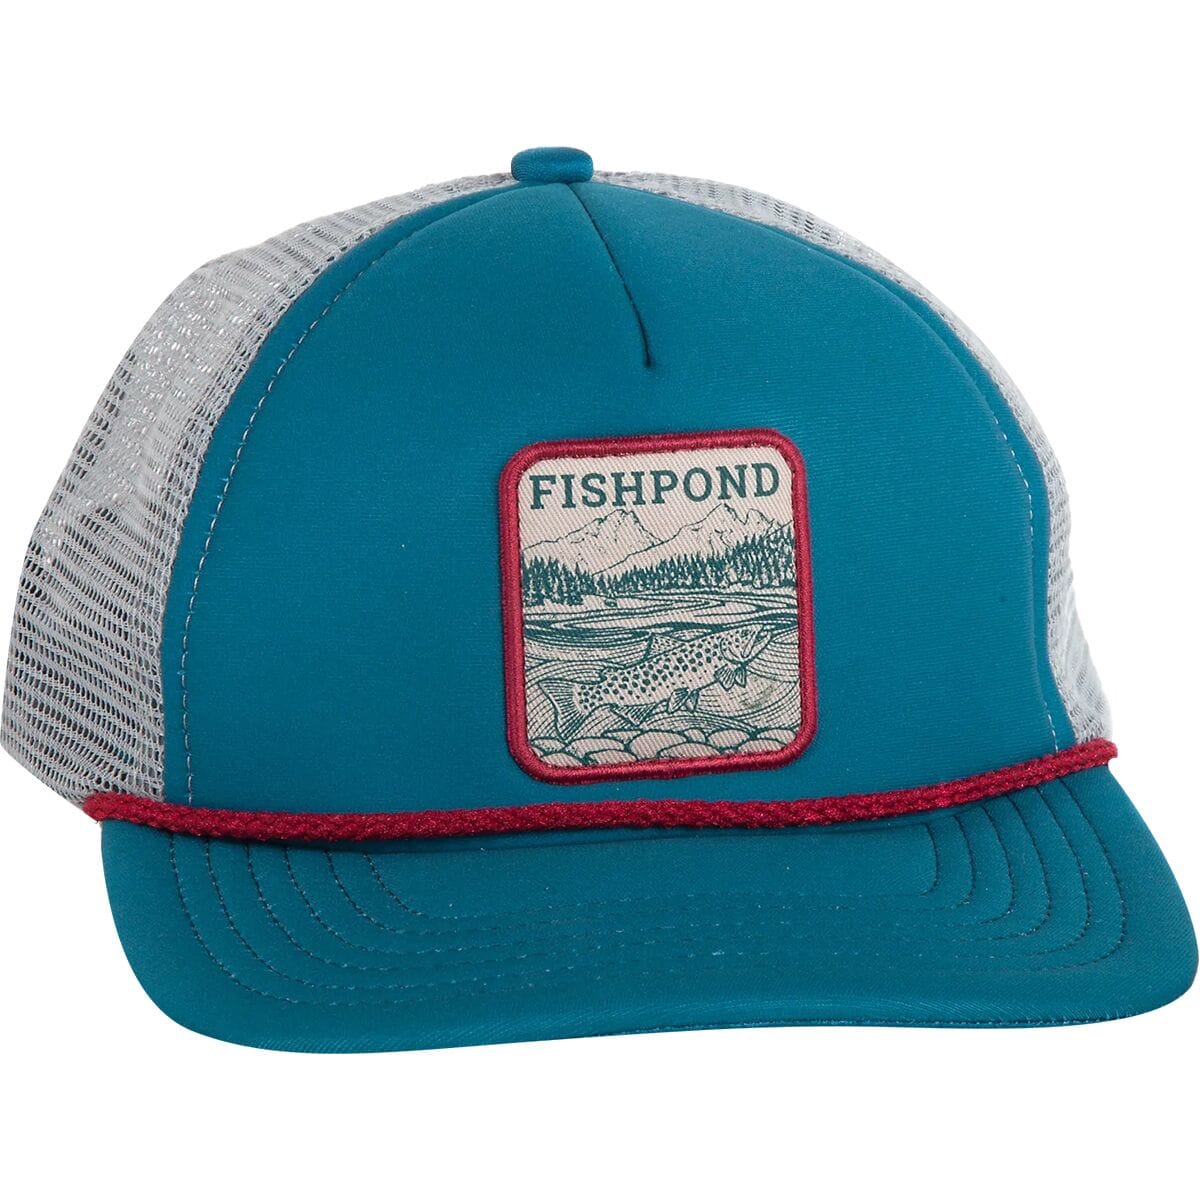 Fishpond Fishing Hats & Neckwear